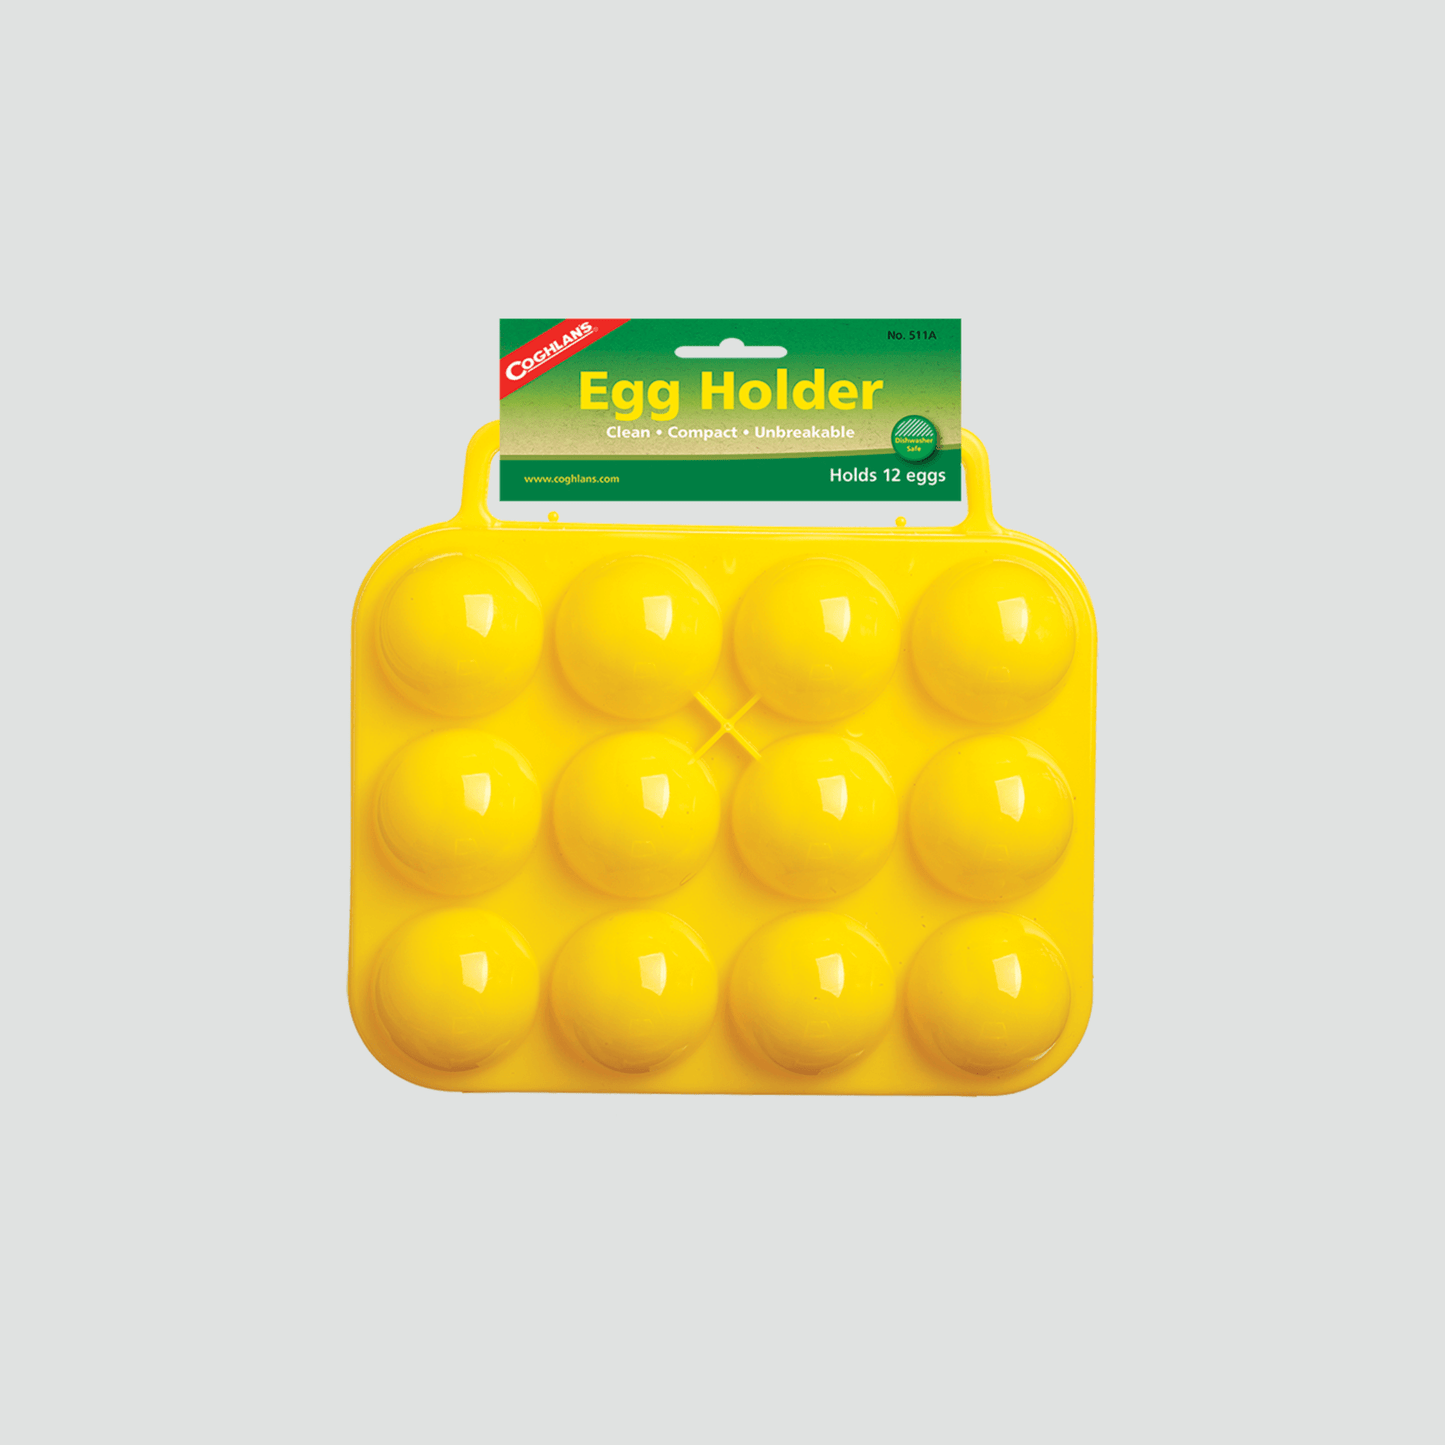 12 count egg holder packaging